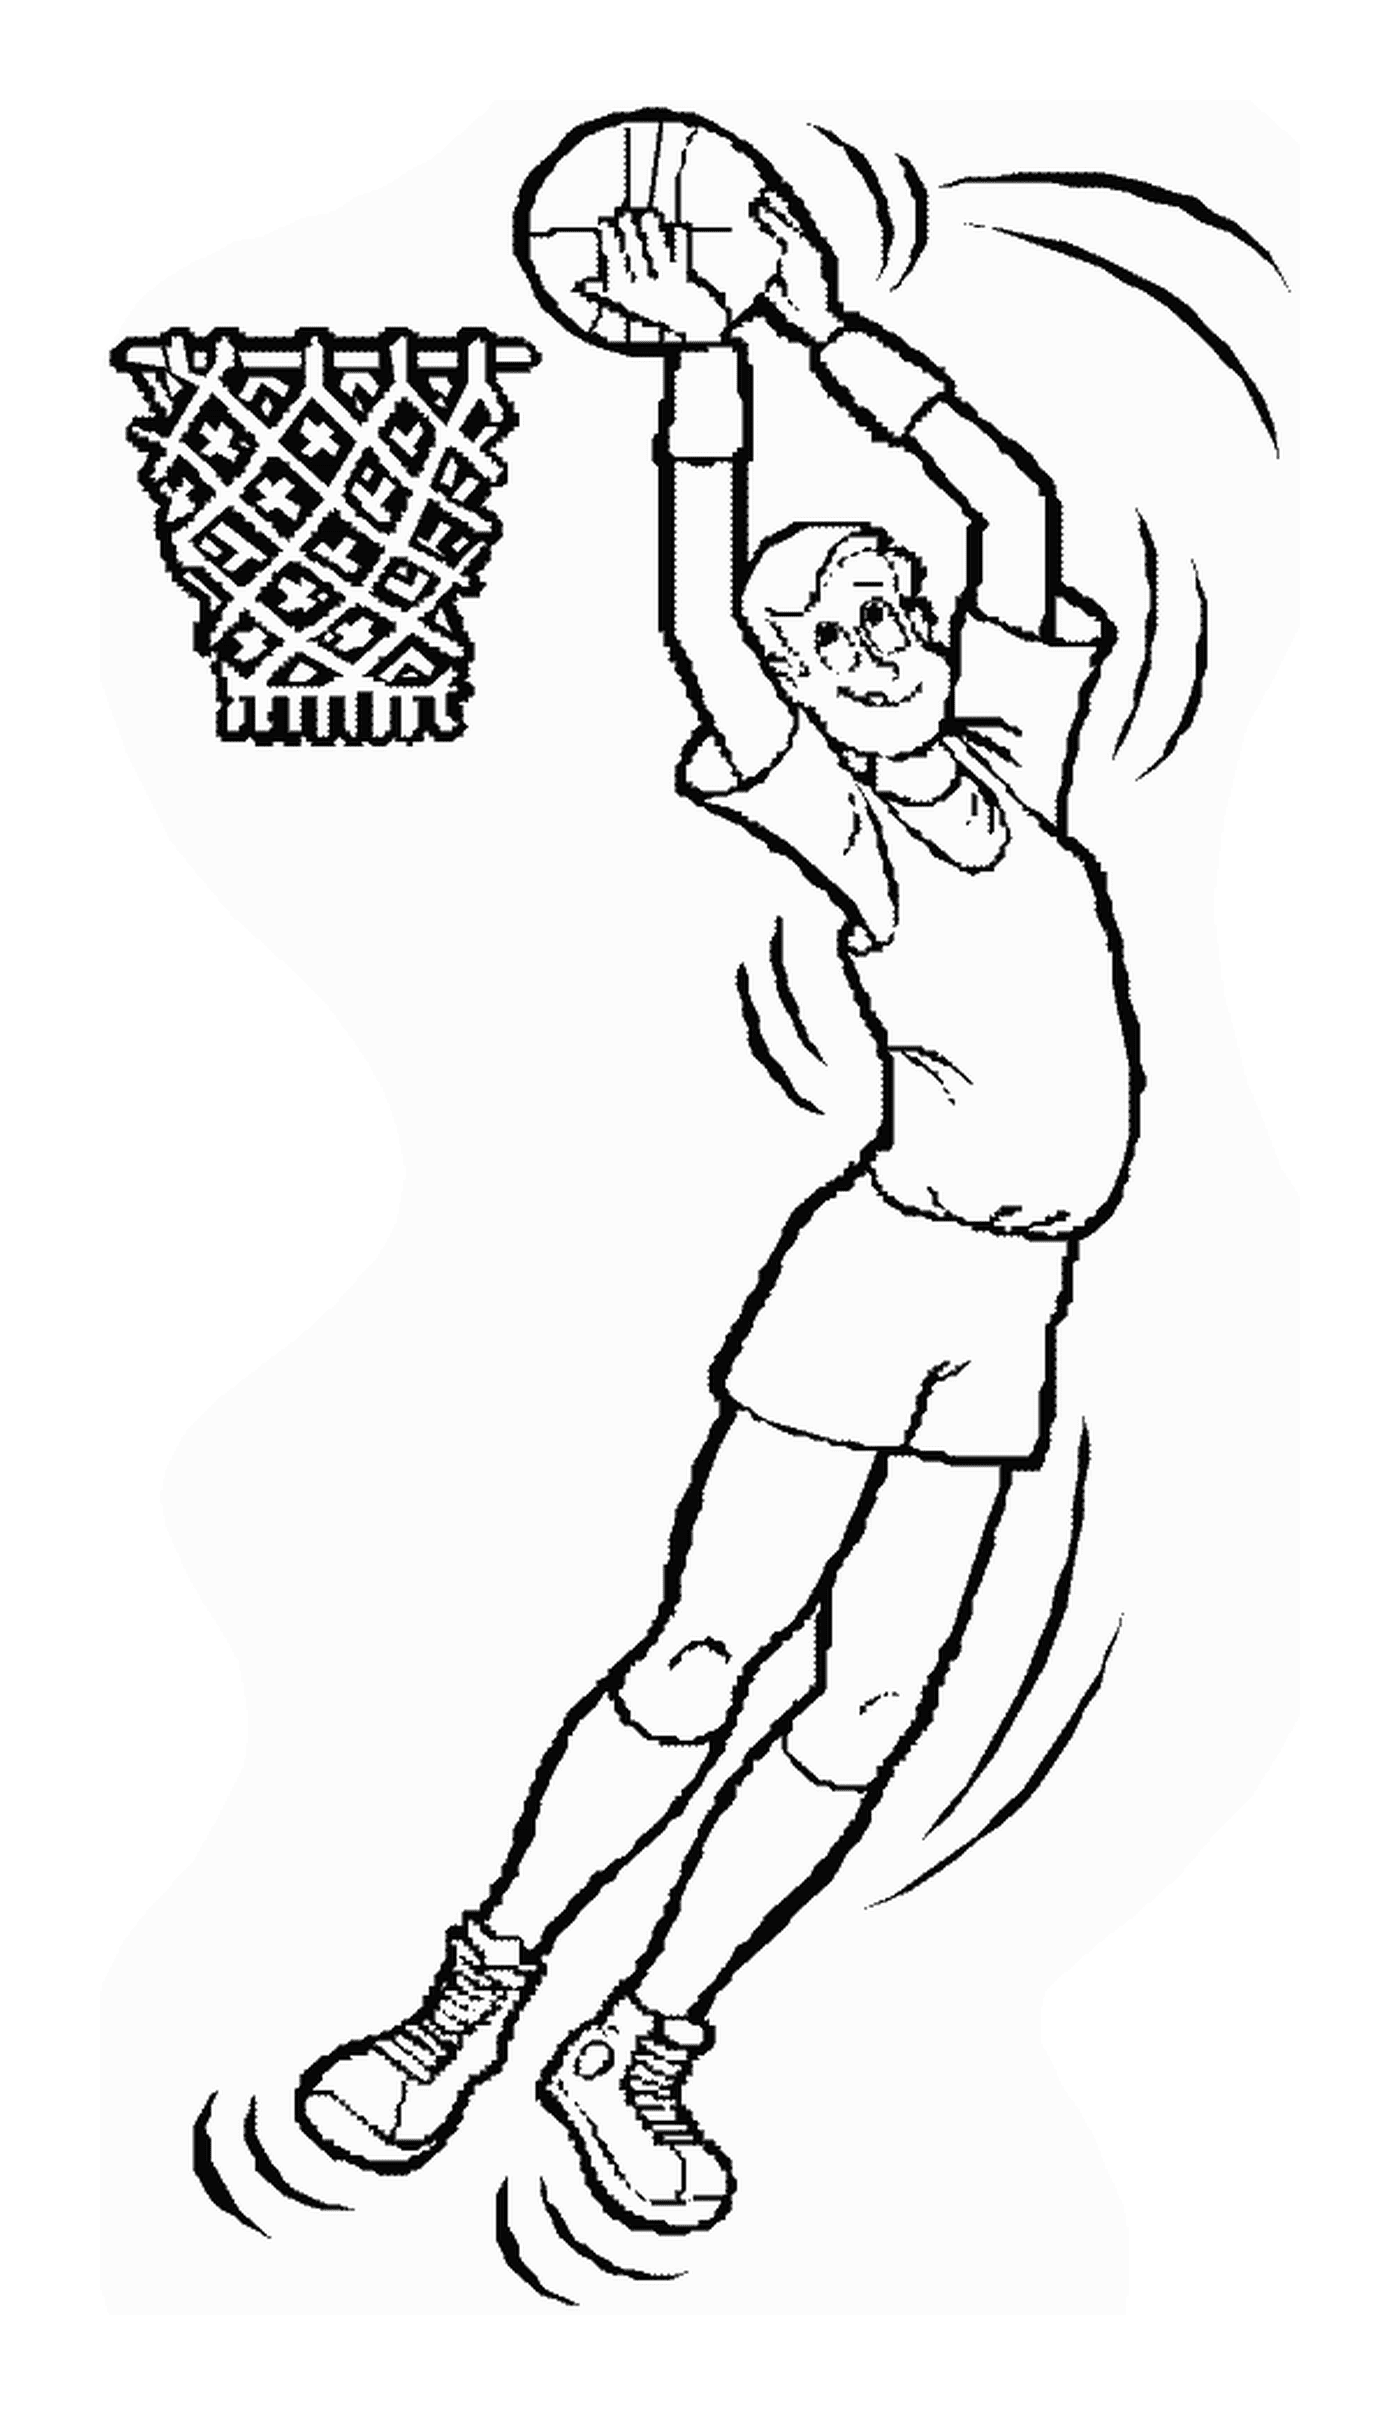  A man jumps to hit a basketball ball 